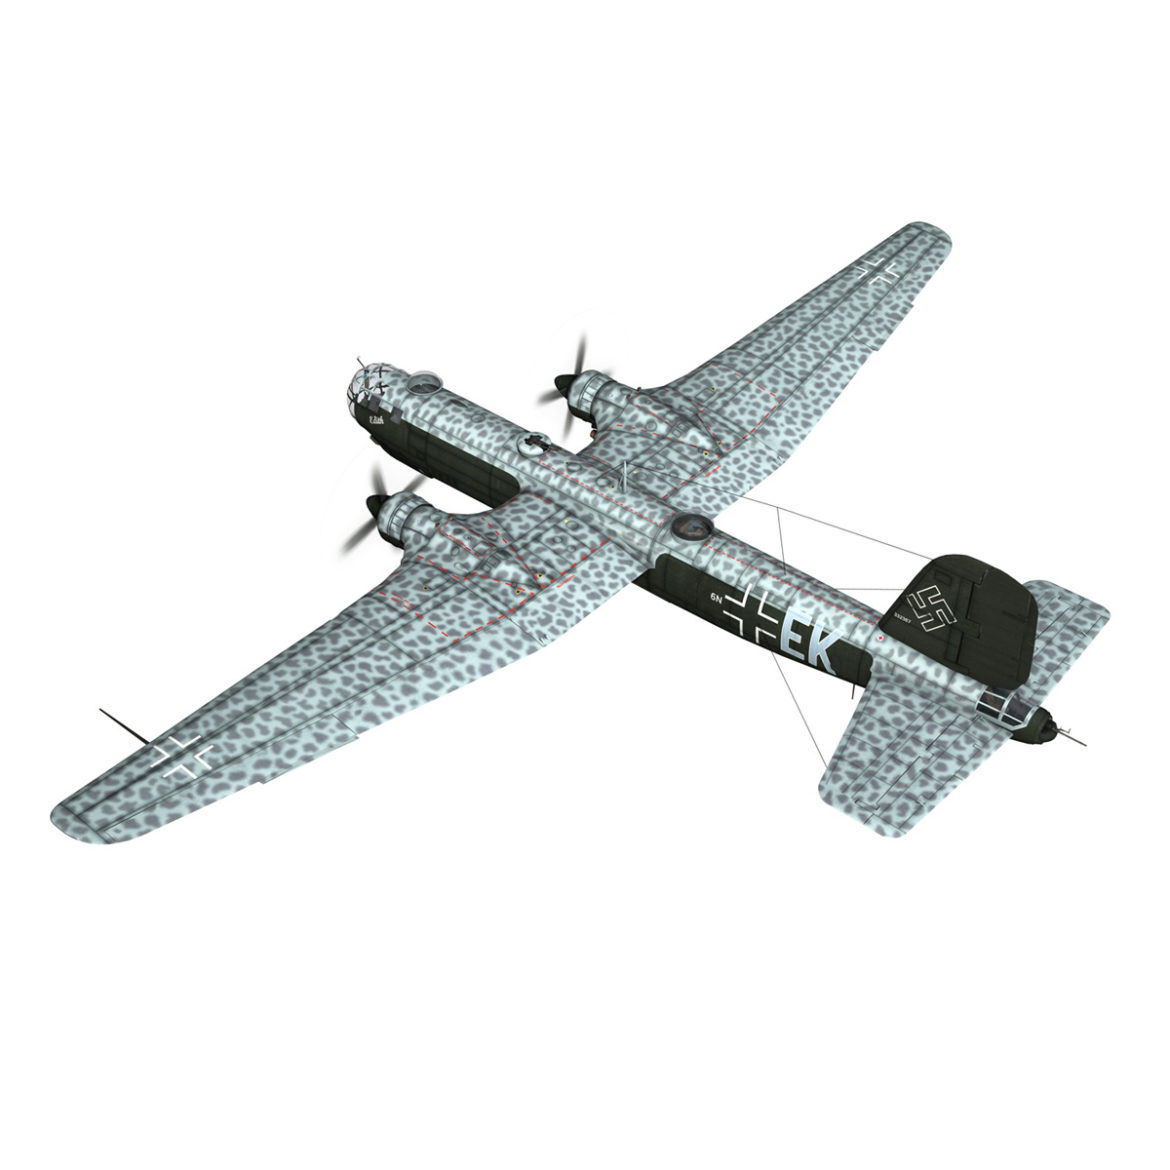 heinkel he-177 – greif – 6nek 3d model 3ds c4d fbx lwo lw lws obj 303975